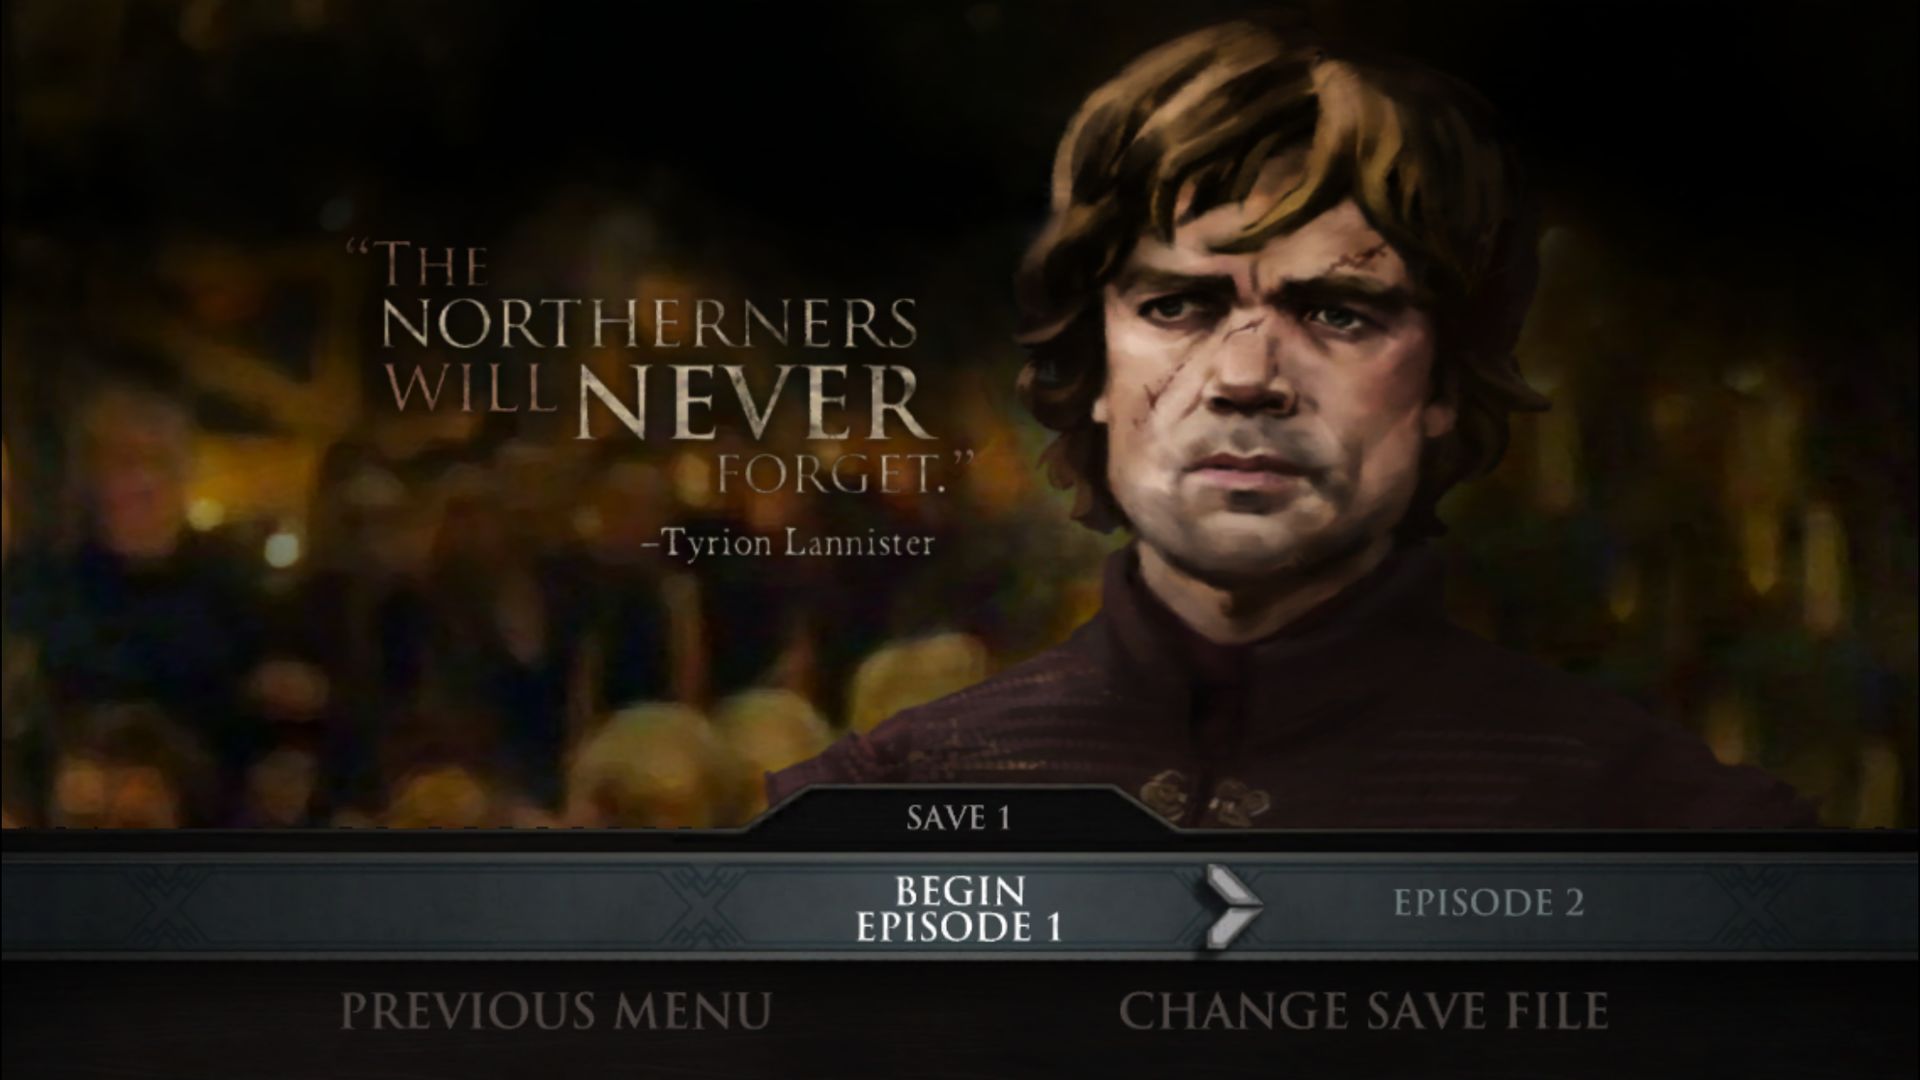 Screenshot of Game of Thrones